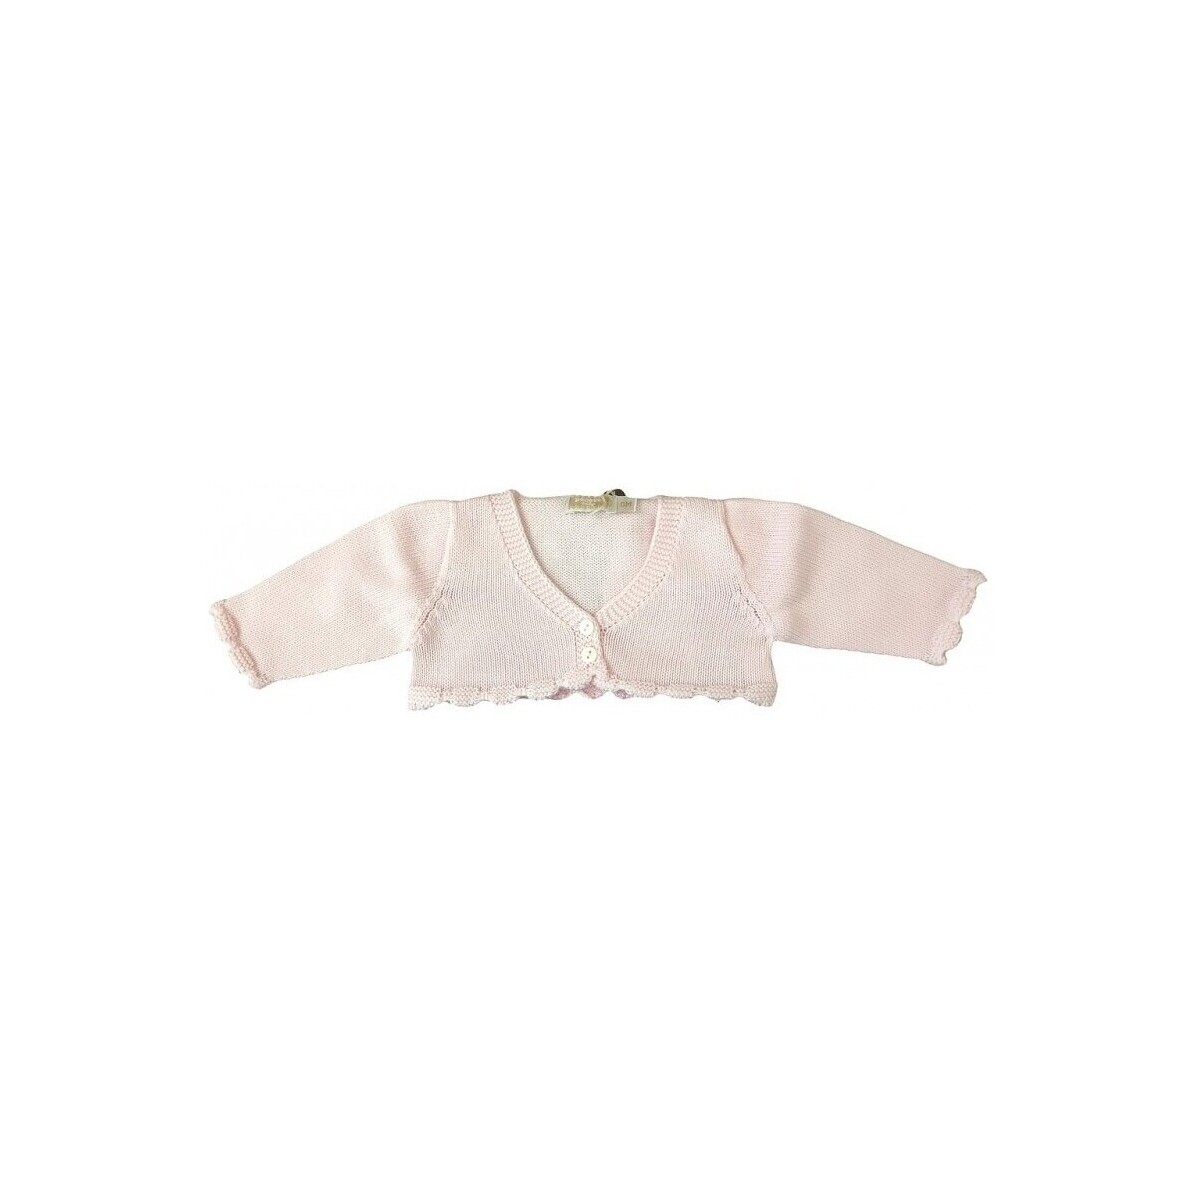 Textil Casacos P. Baby 23815-1 Rosa